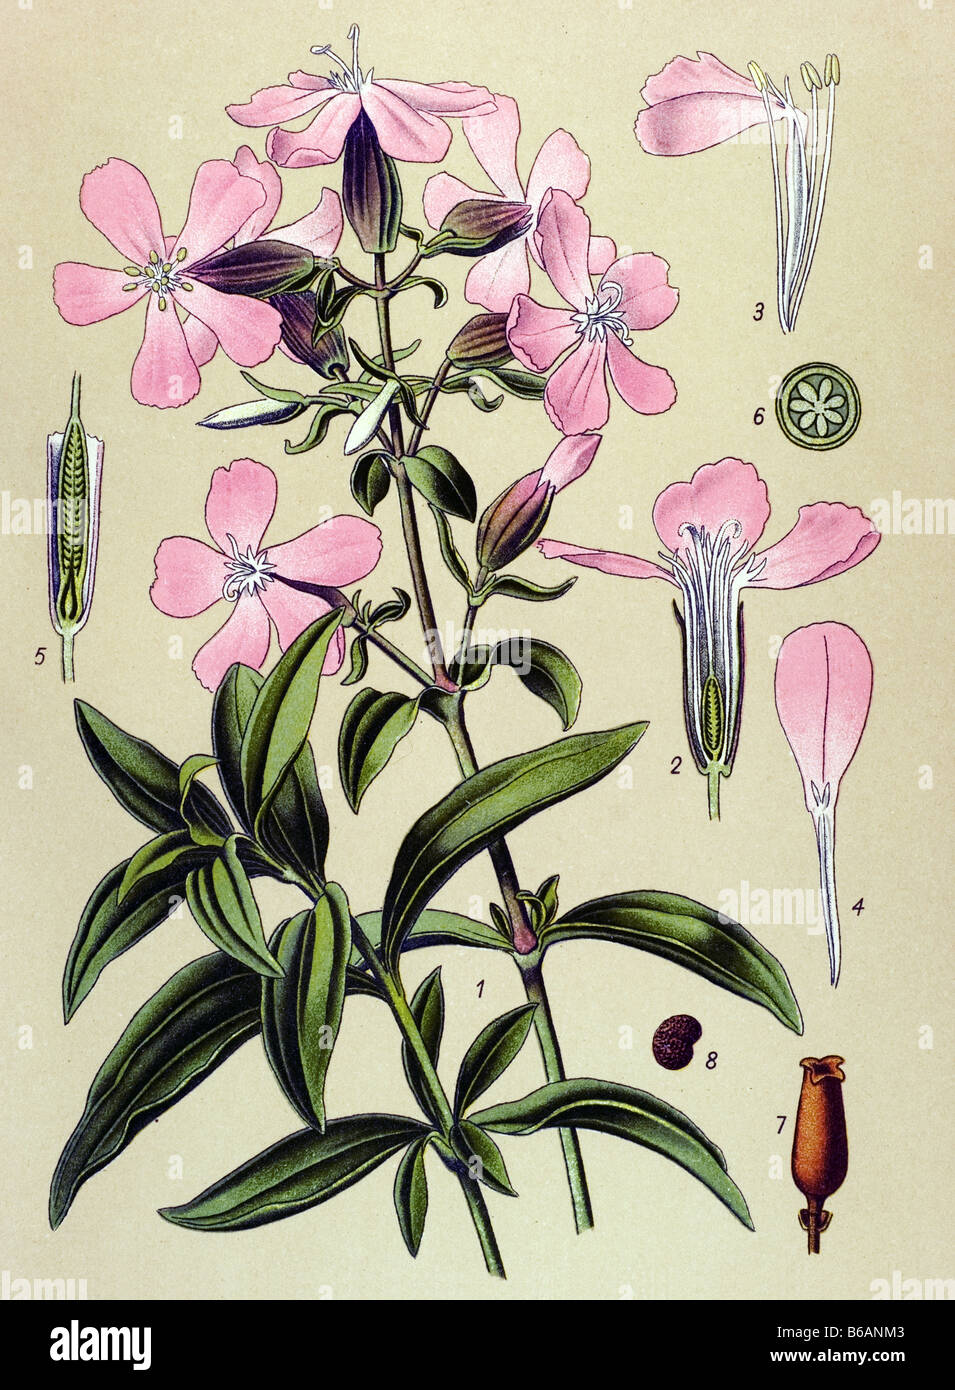 Common Soapwort, Saponaria officinalis, poisonous plants illustrations Stock Photo